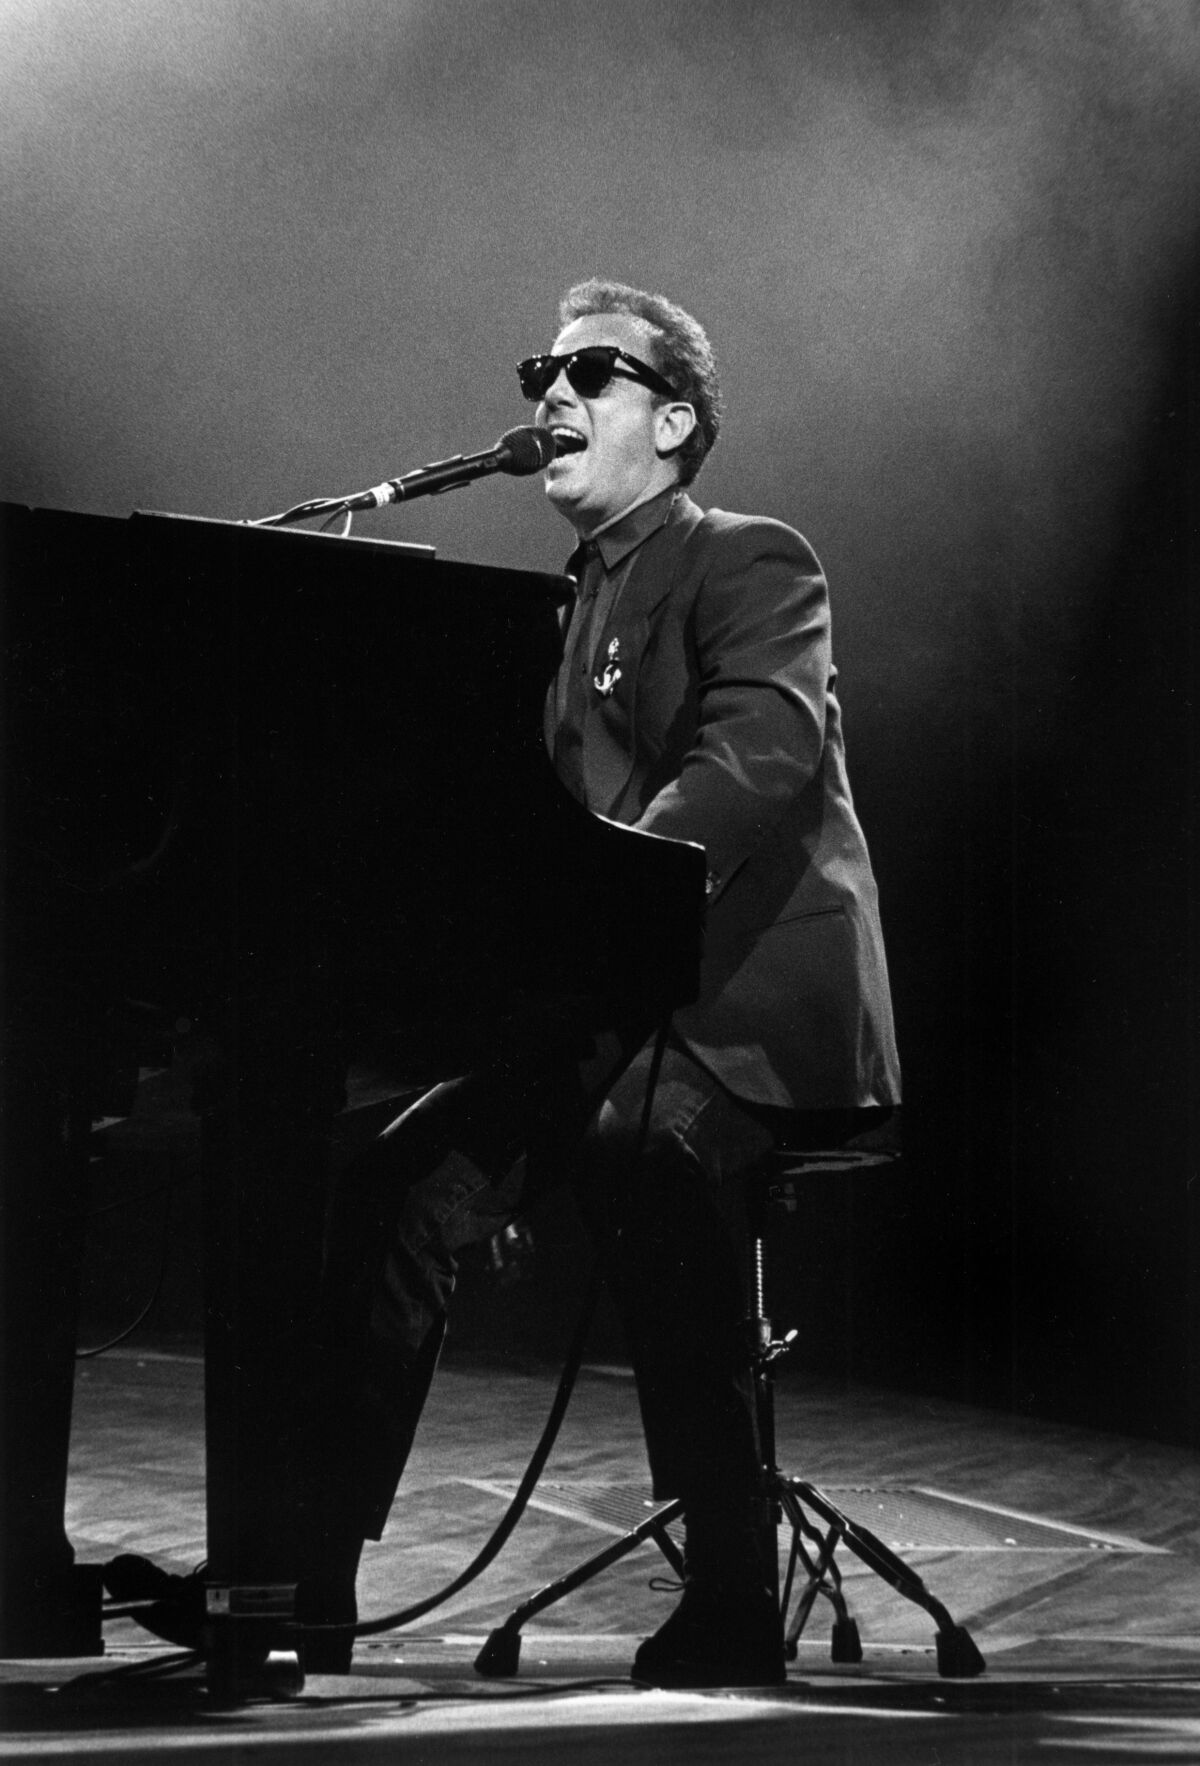 Billy Joel at a piano, wearing dark sunglasses, performing in 1989 New York.